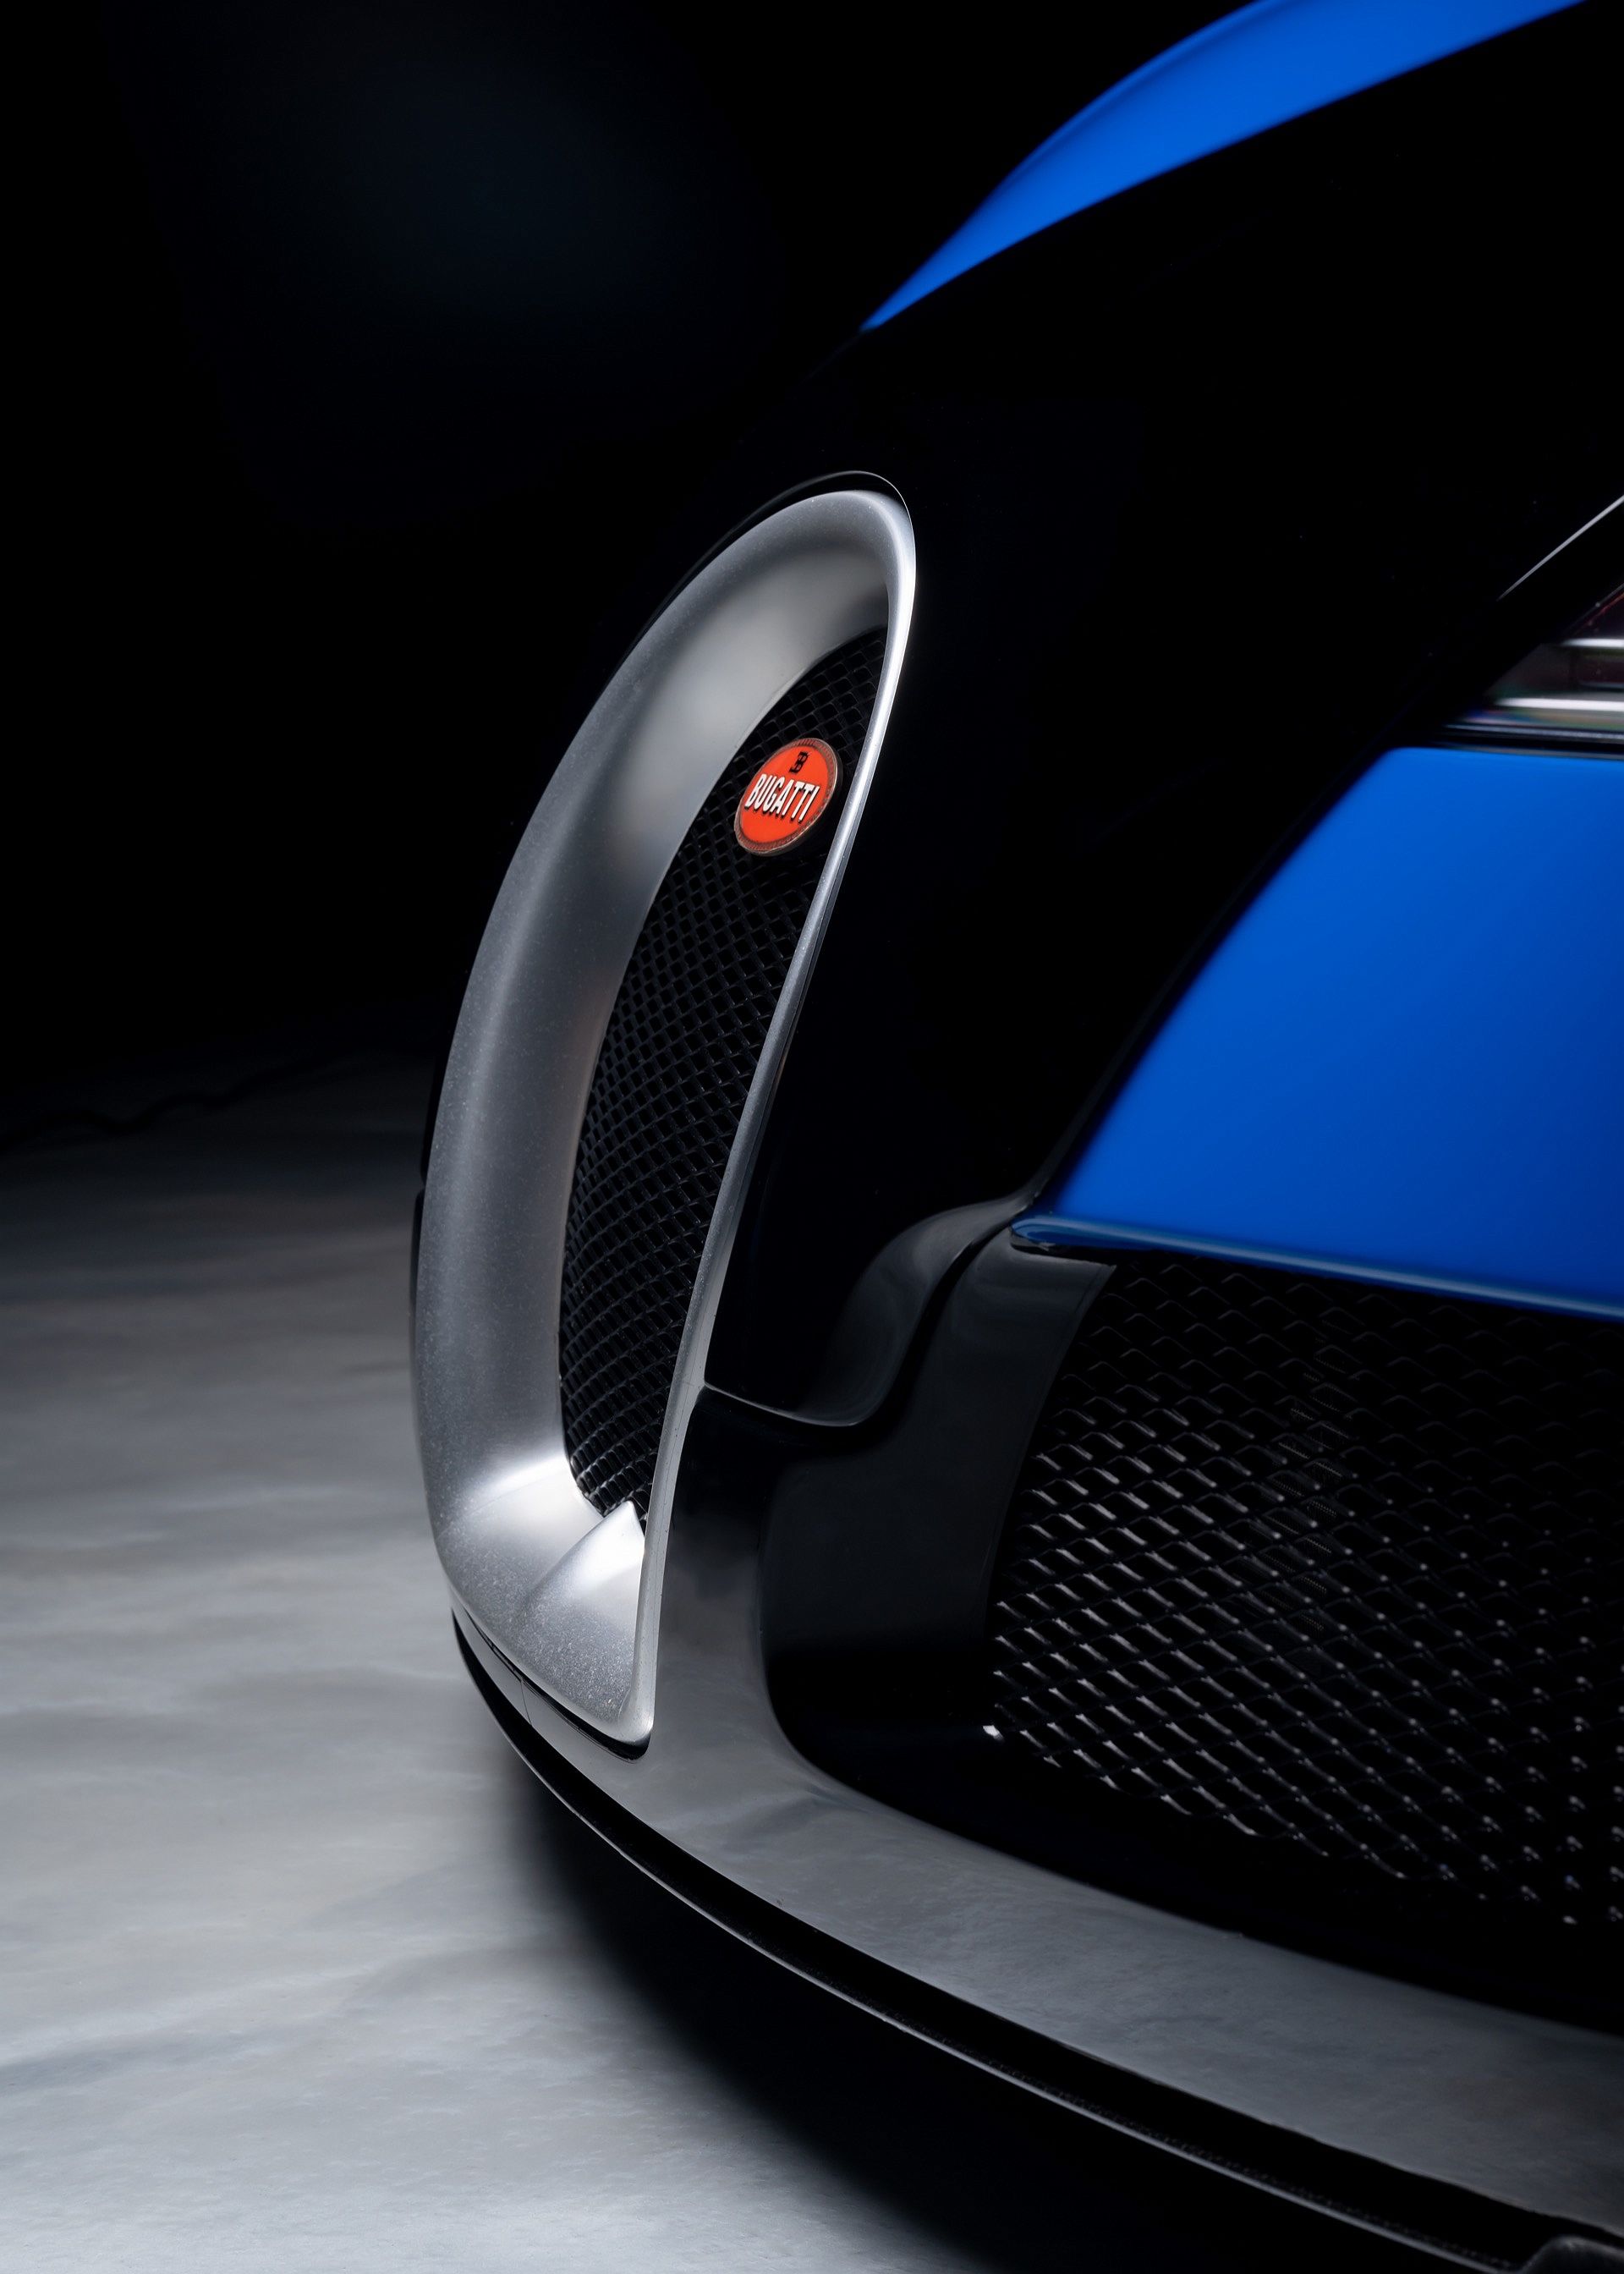 2008 Bugatti Veyron 16.4 image 18